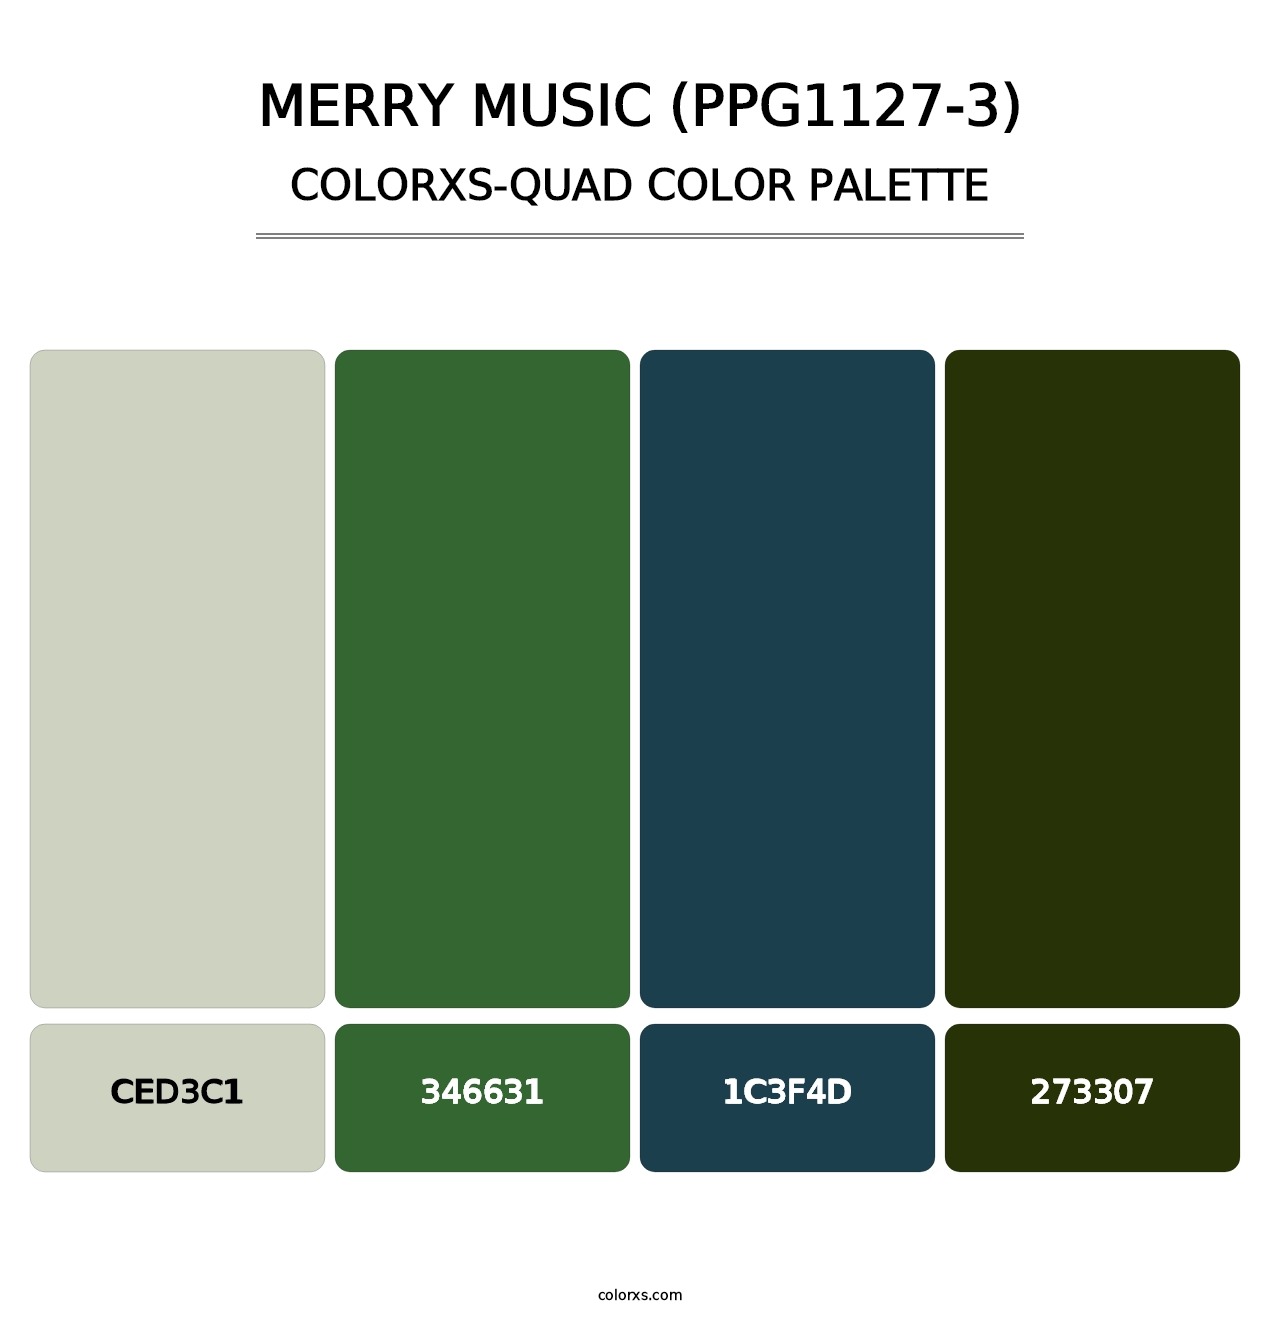 Merry Music (PPG1127-3) - Colorxs Quad Palette